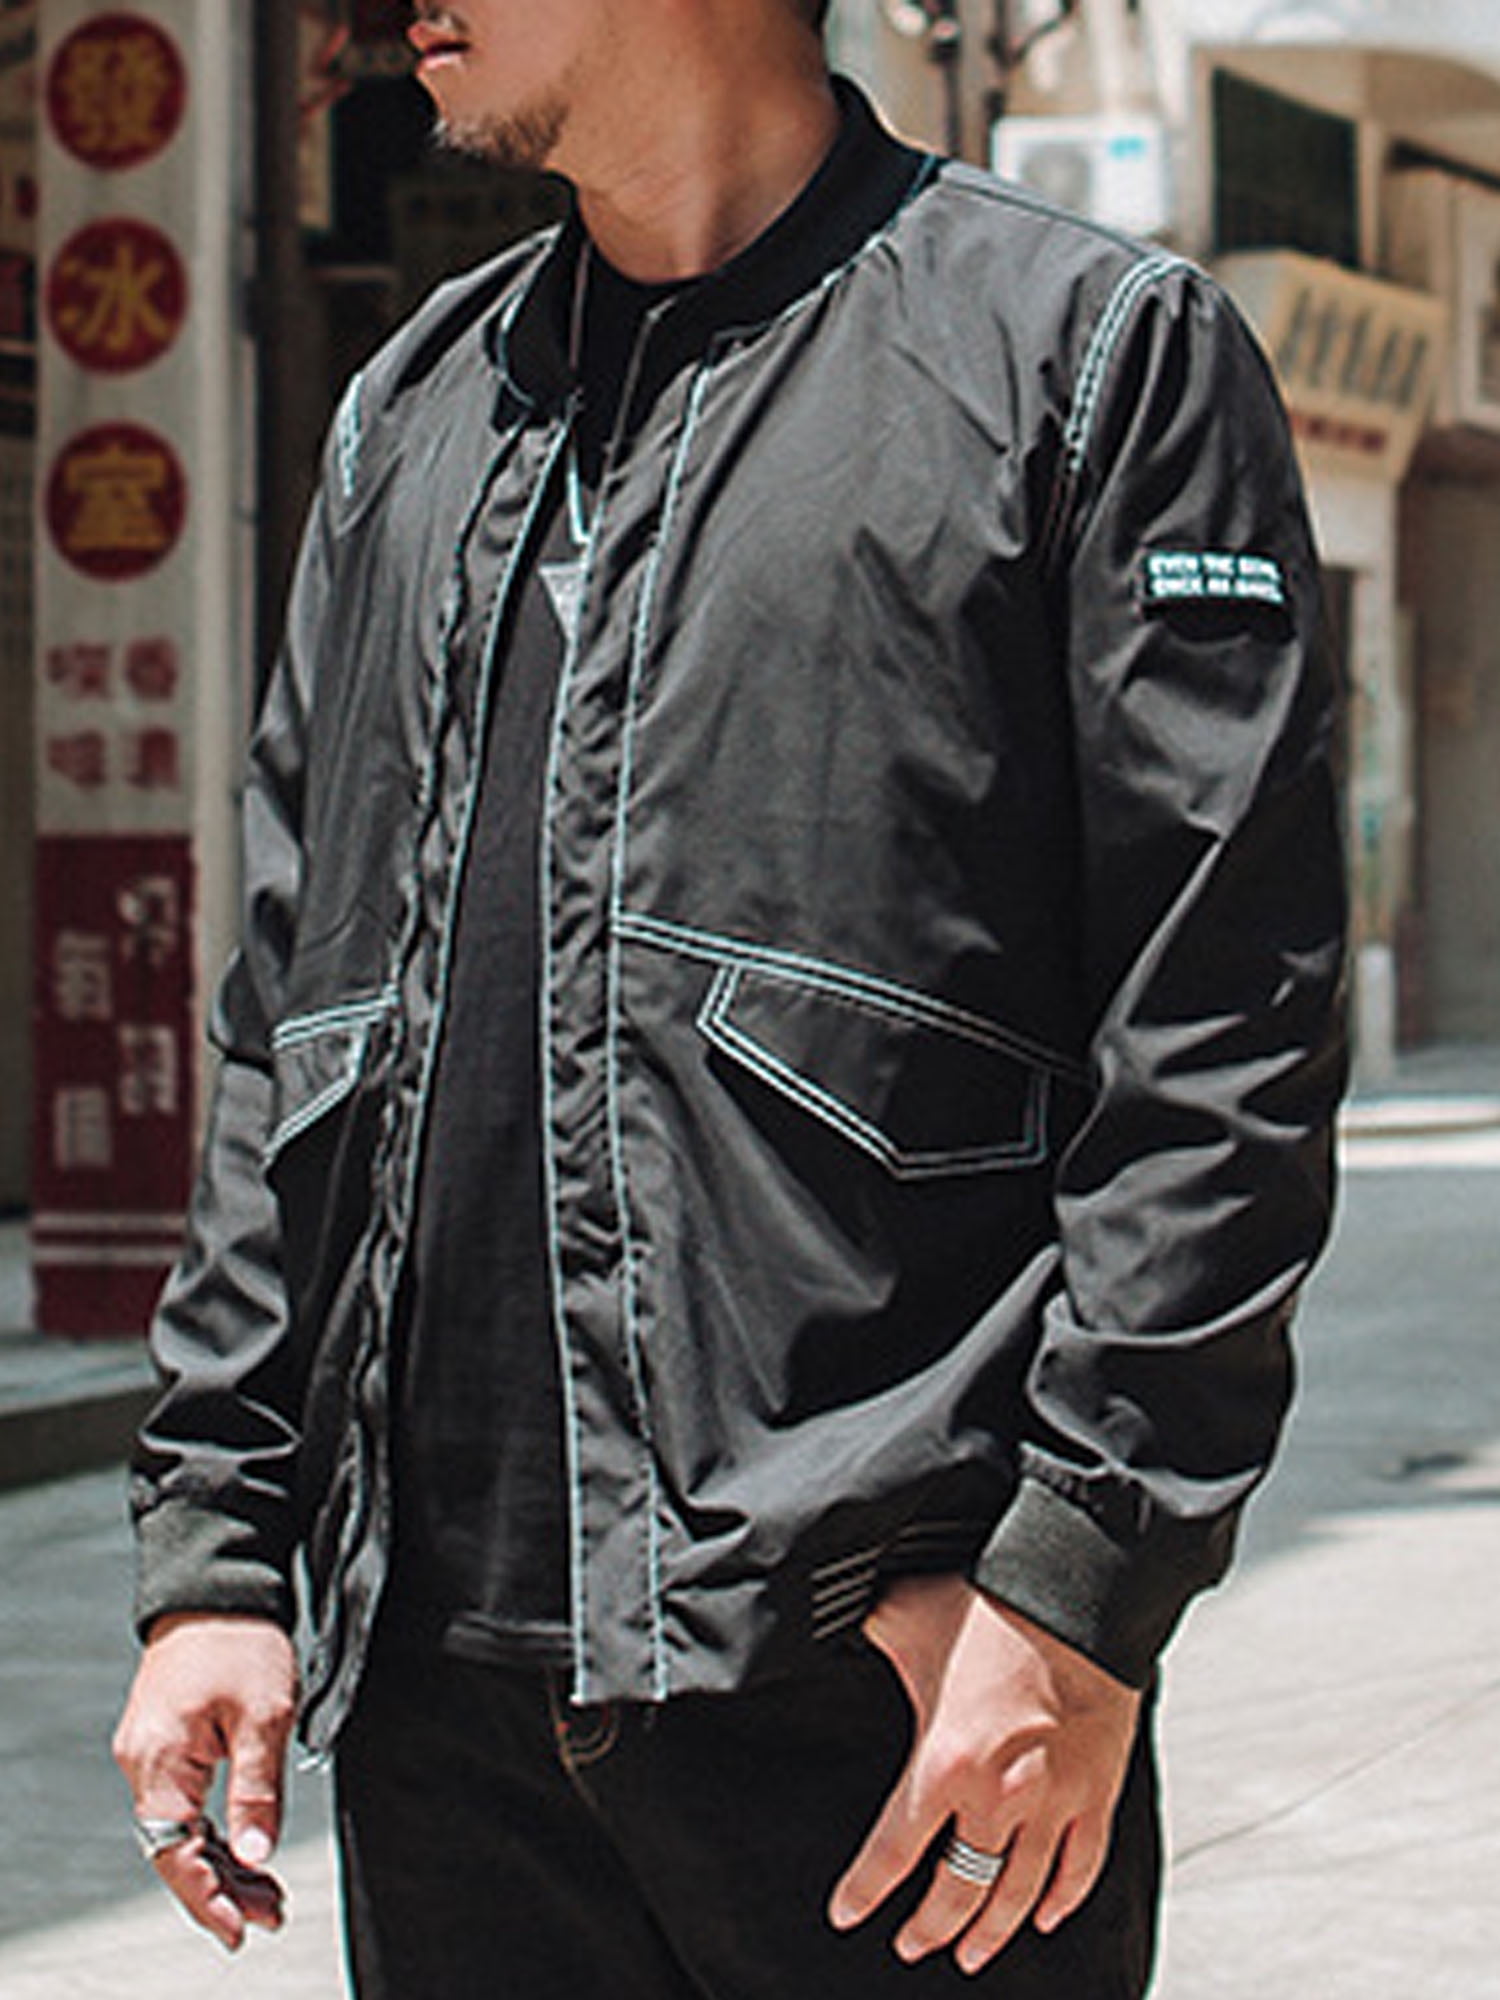 Men's Leopard Bomber Jacket Lightweight Athletic Jackets Causal Varsity Windbreaker Track Jacket Fashion Coat